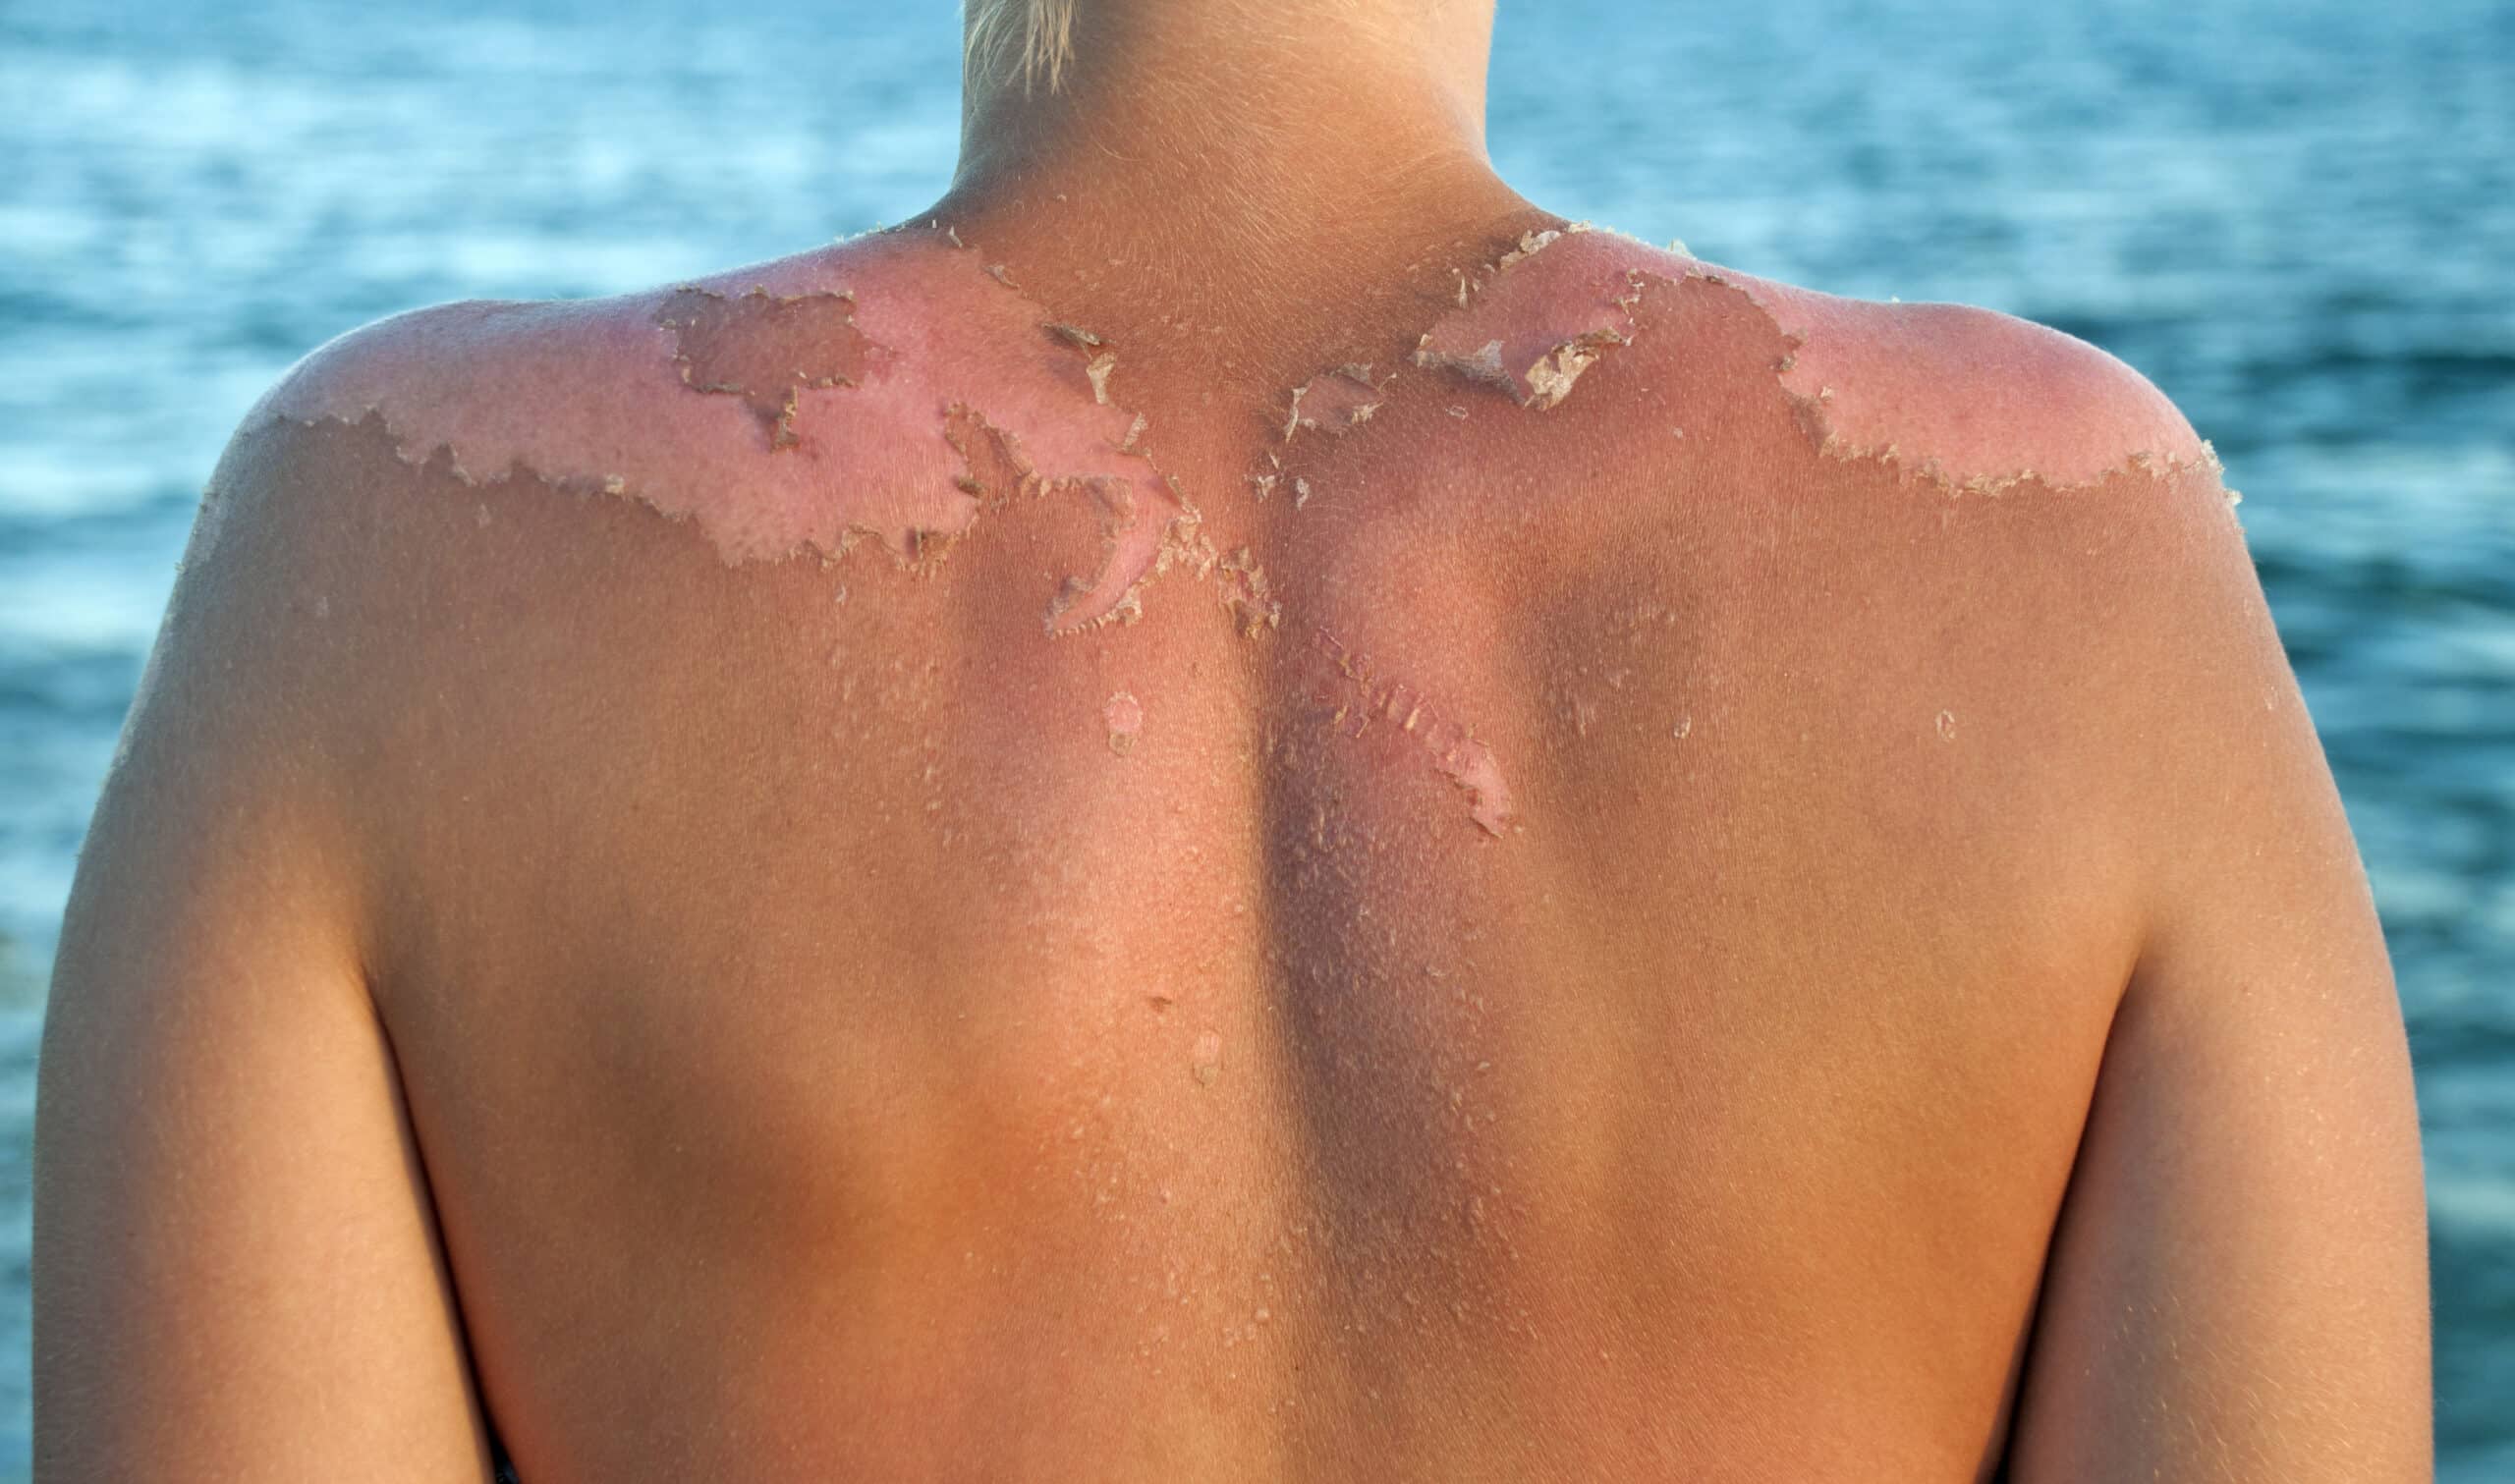 Peeling sunburned back